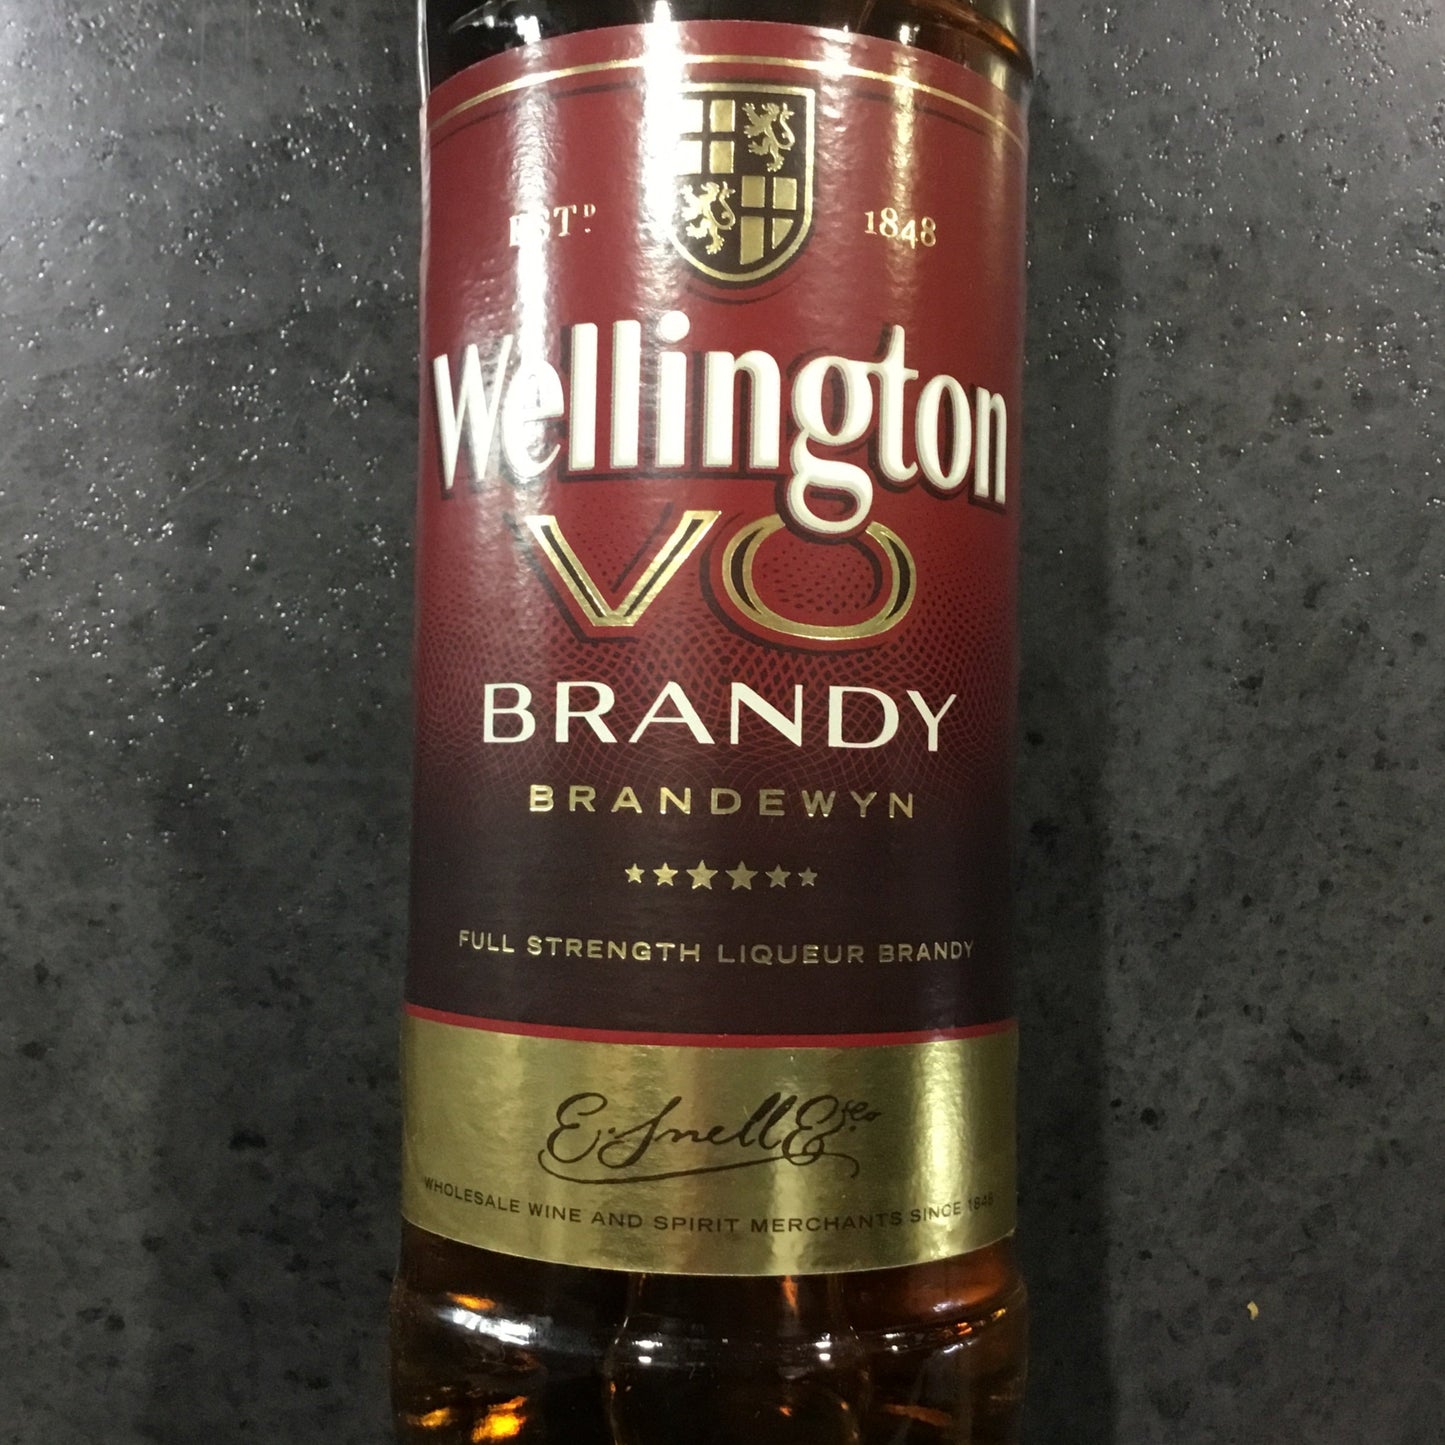 Wellington VO Brandy Edward Snell 750ml